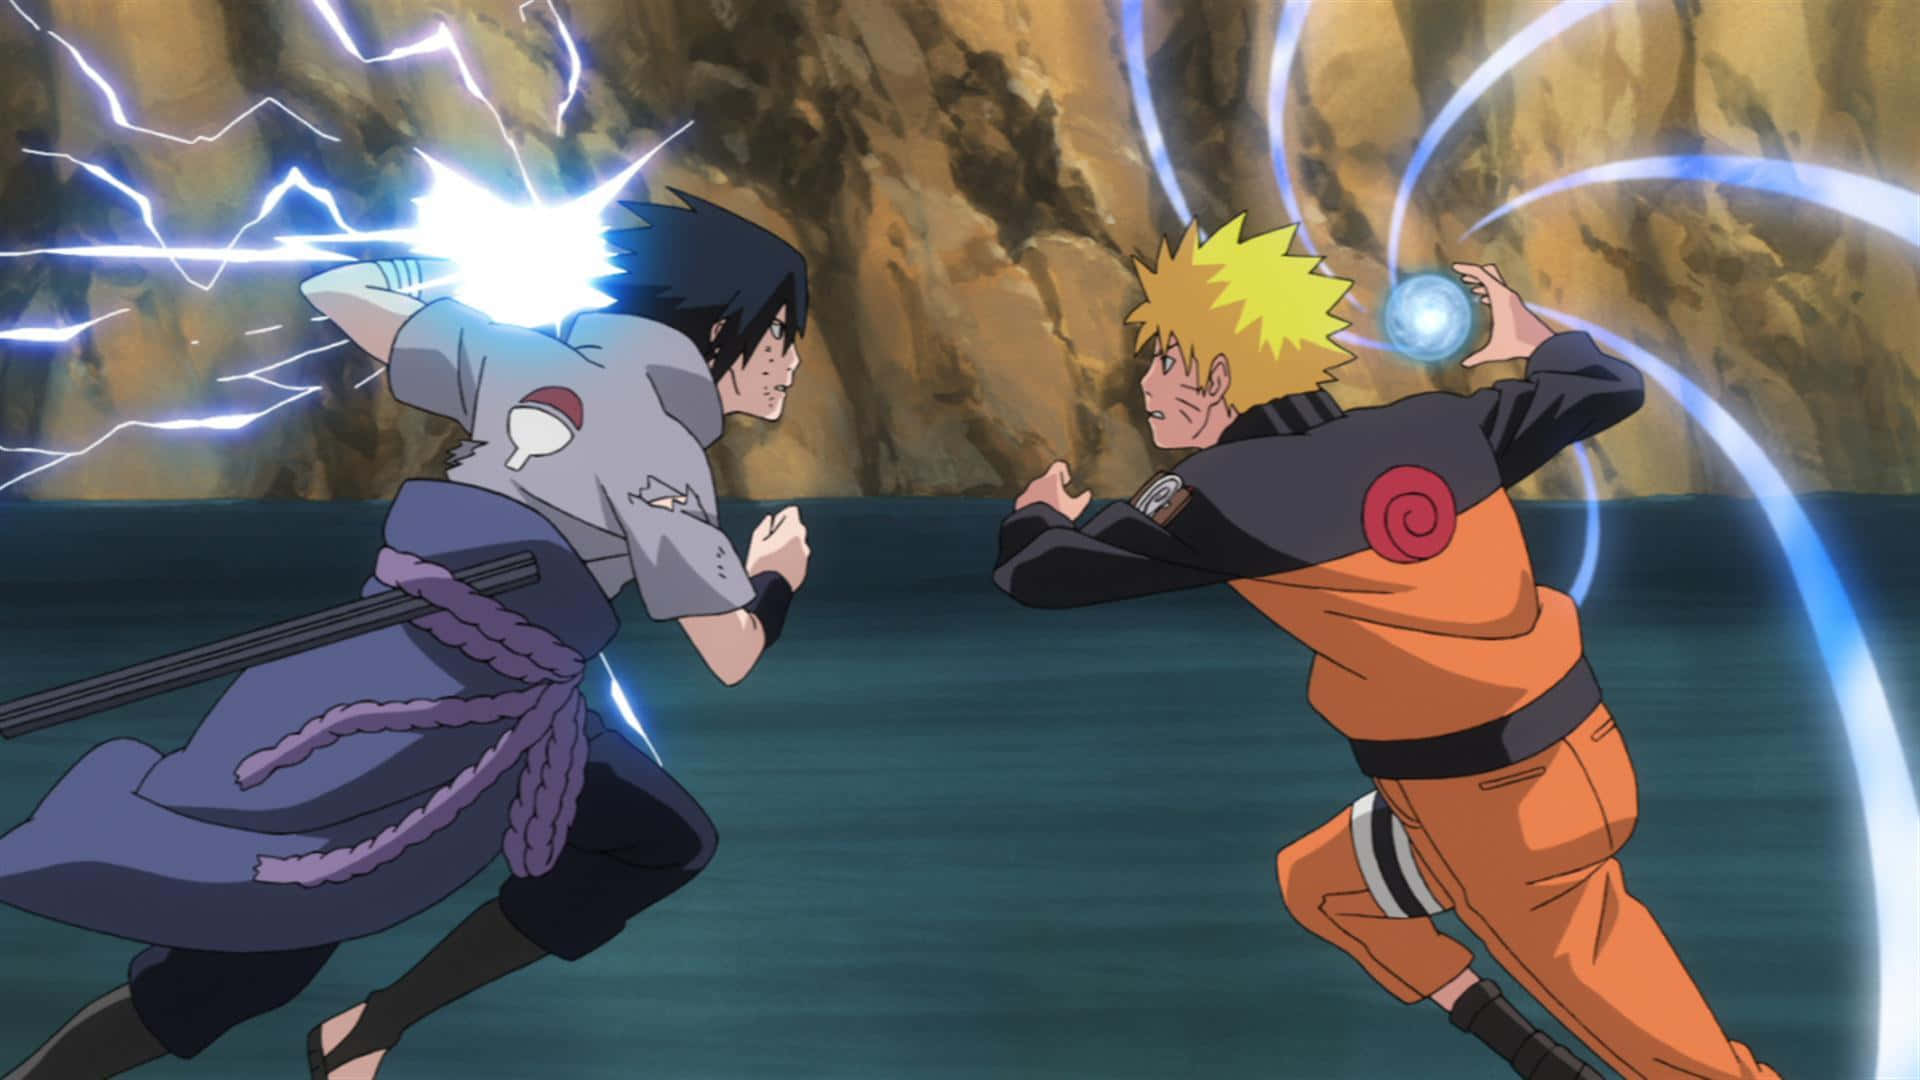 Naruto, Sasuke and Kakashi Conquer their Challenges Together Wallpaper